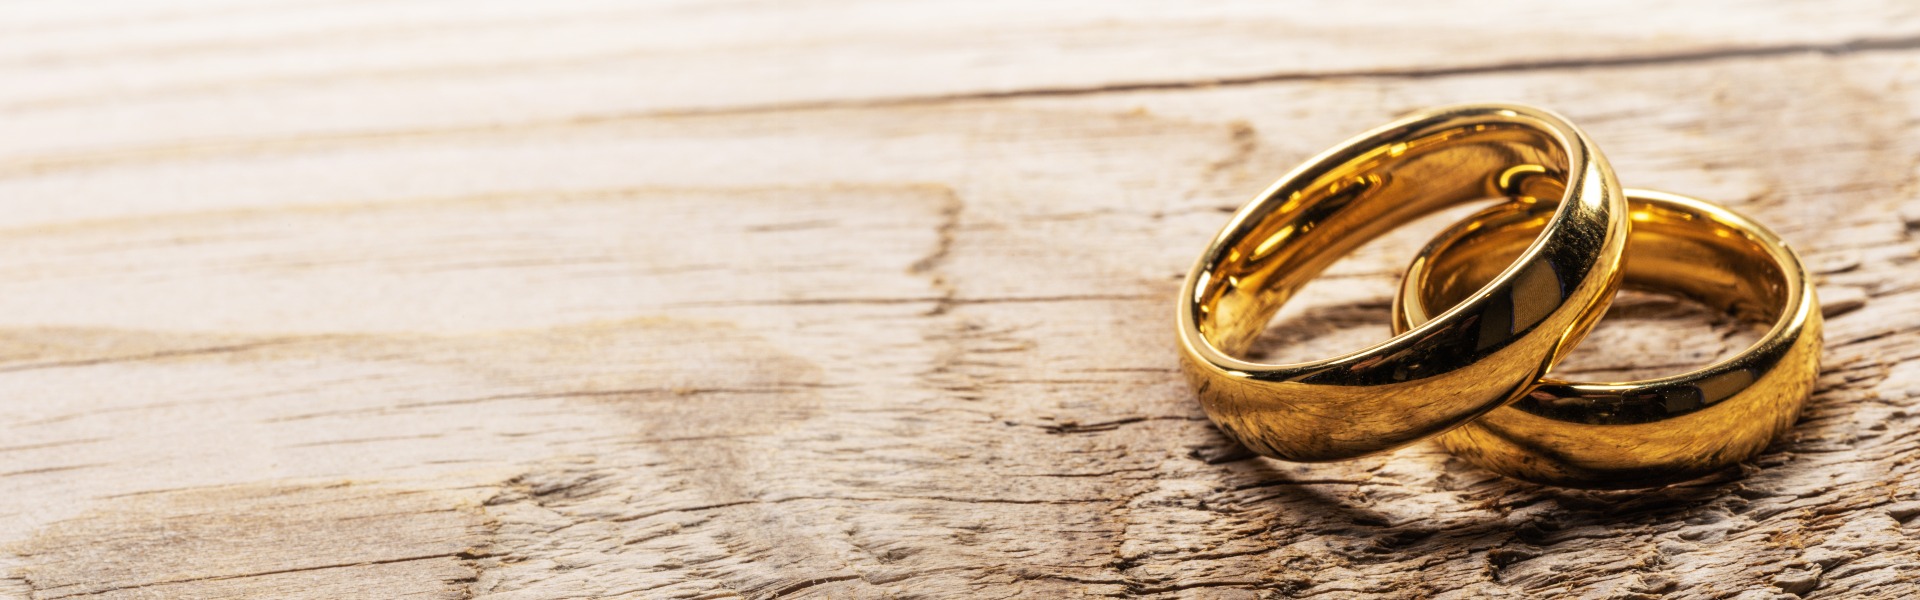 Golden wedding rings on wood